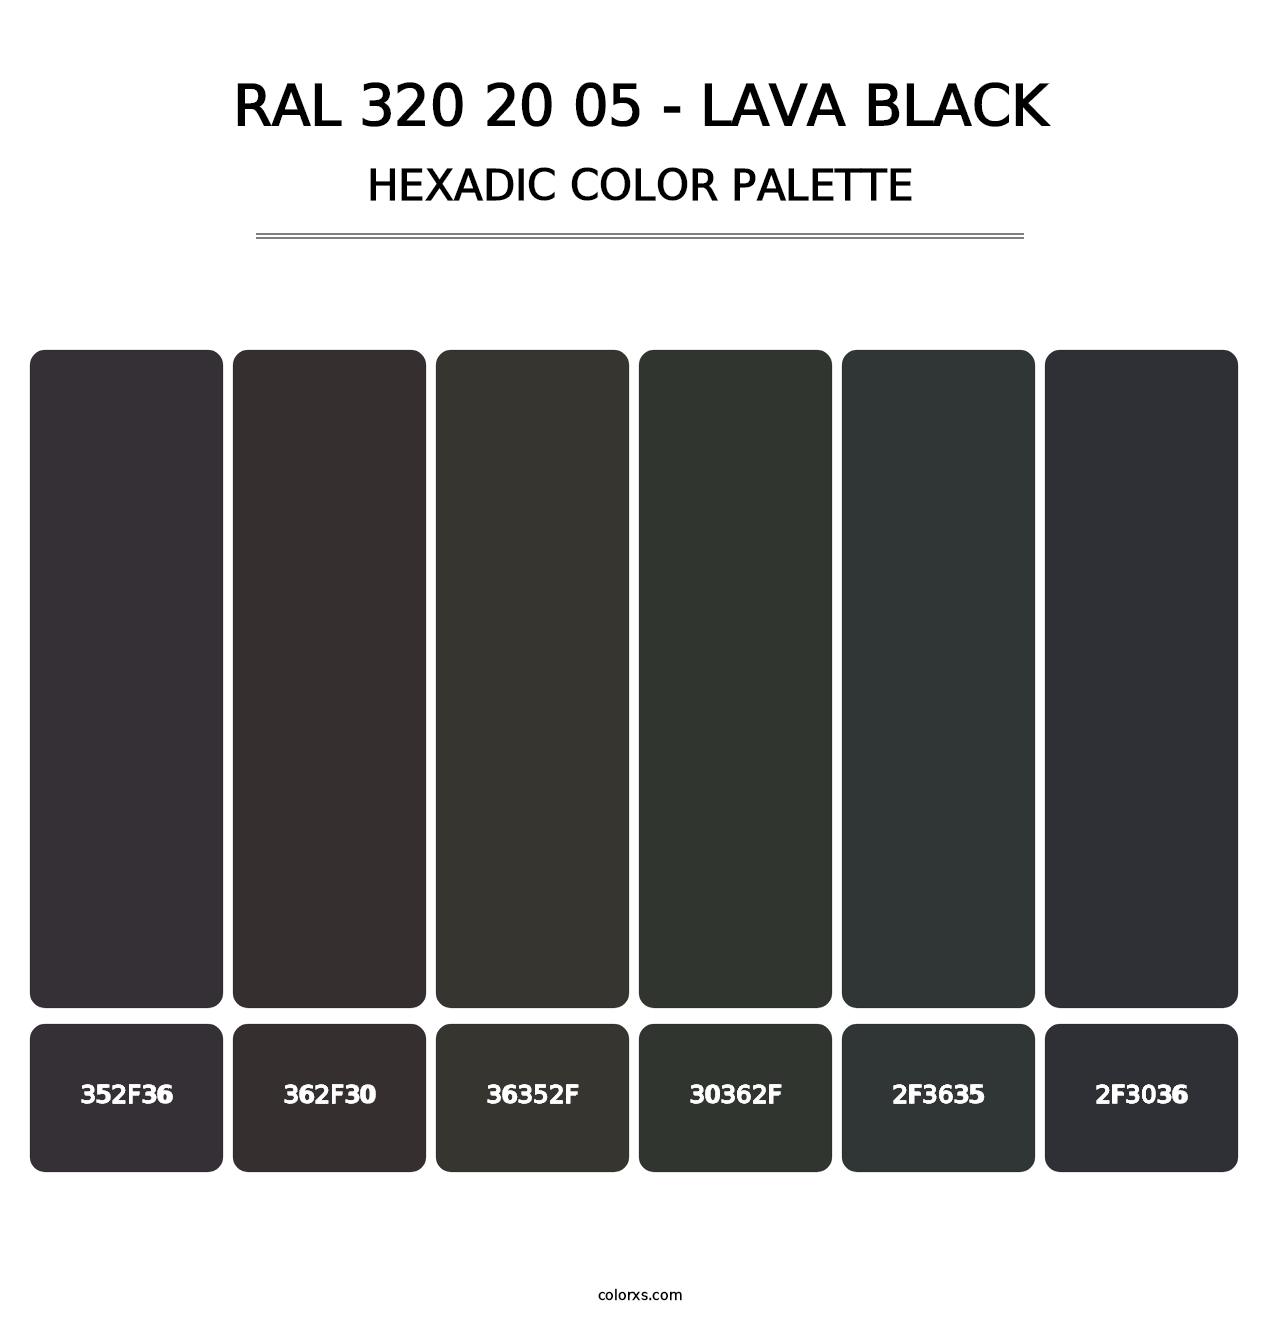 RAL 320 20 05 - Lava Black - Hexadic Color Palette